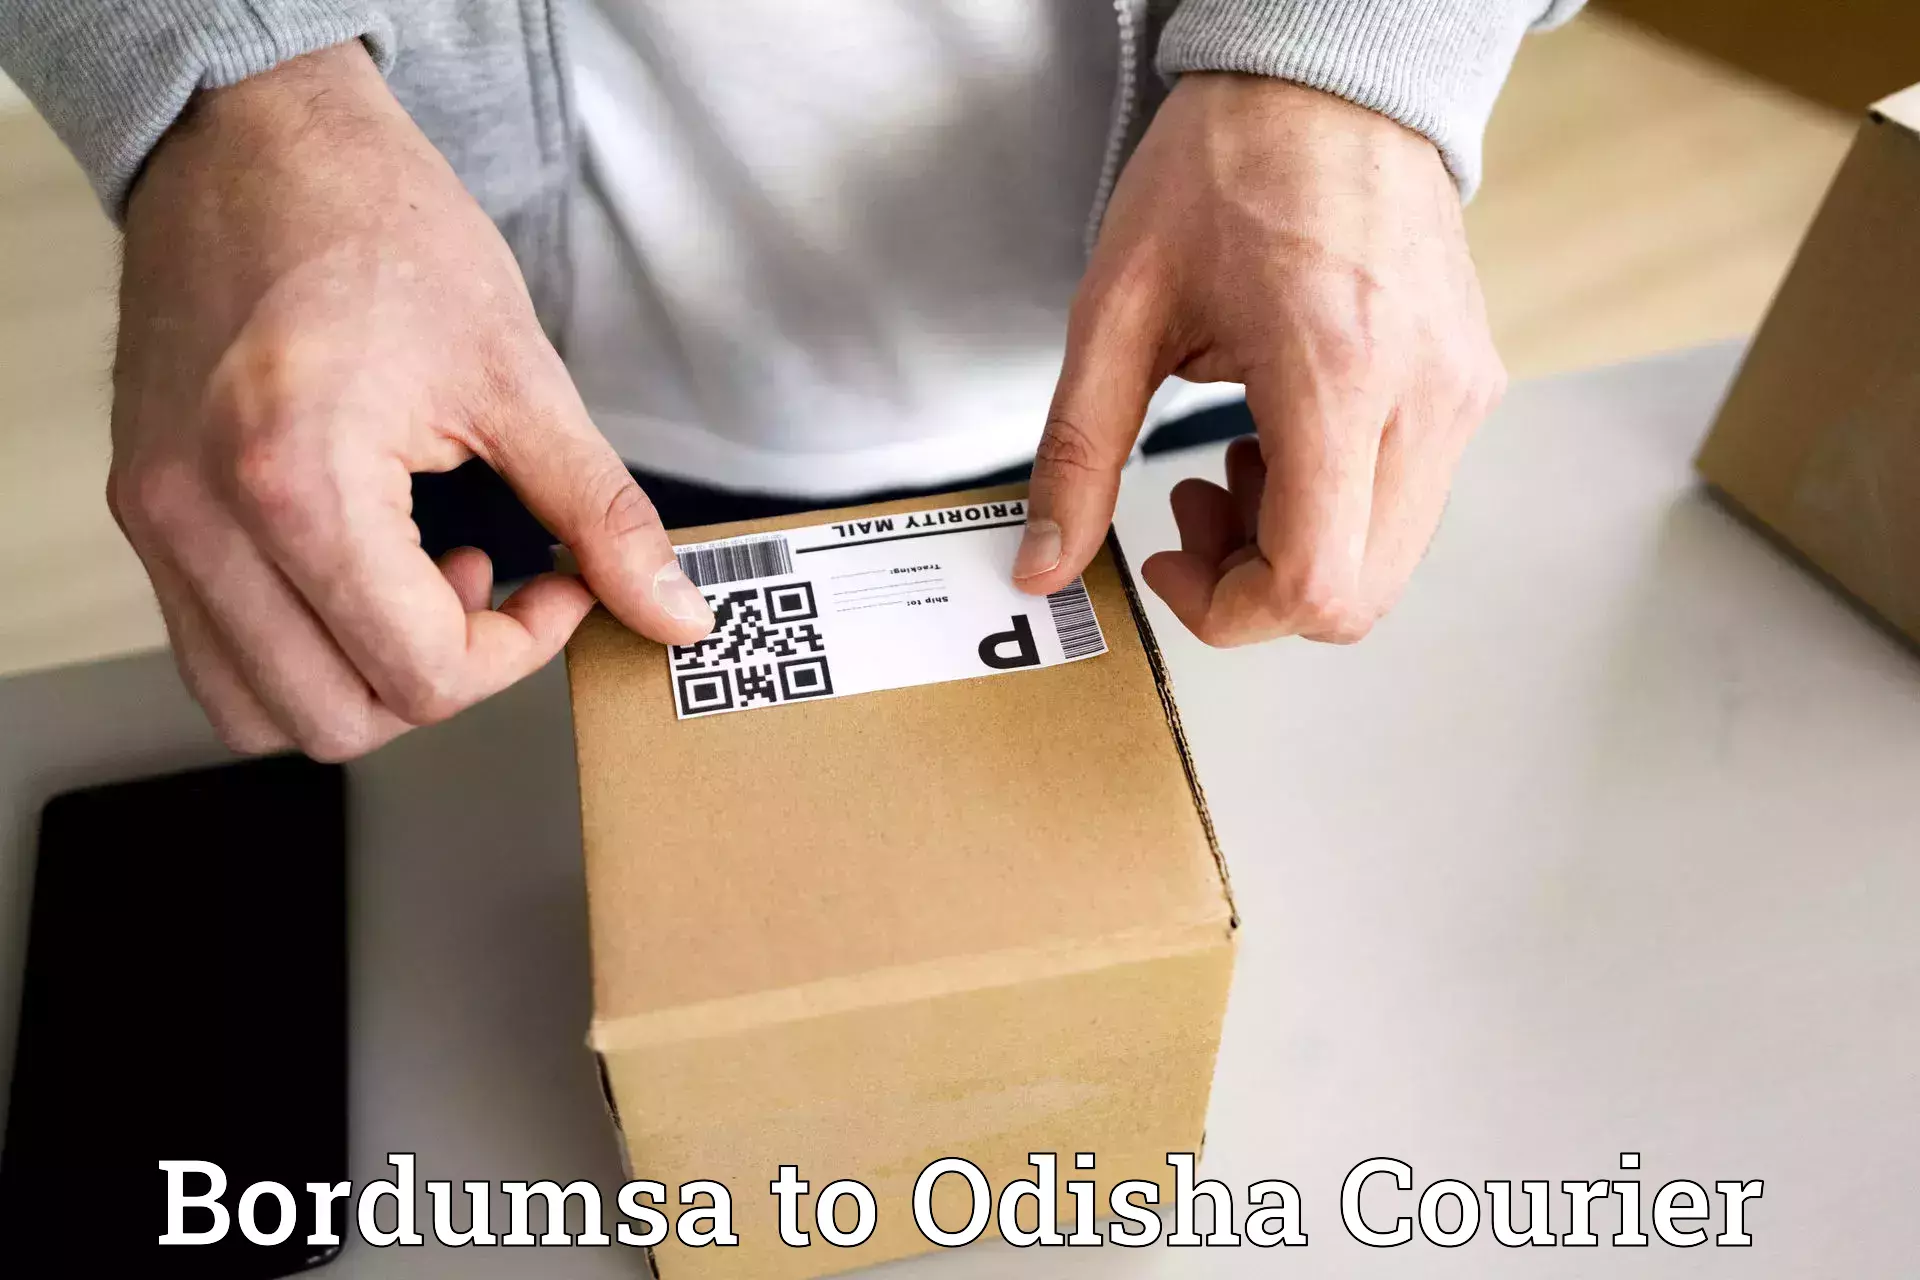 Courier service innovation Bordumsa to Odisha